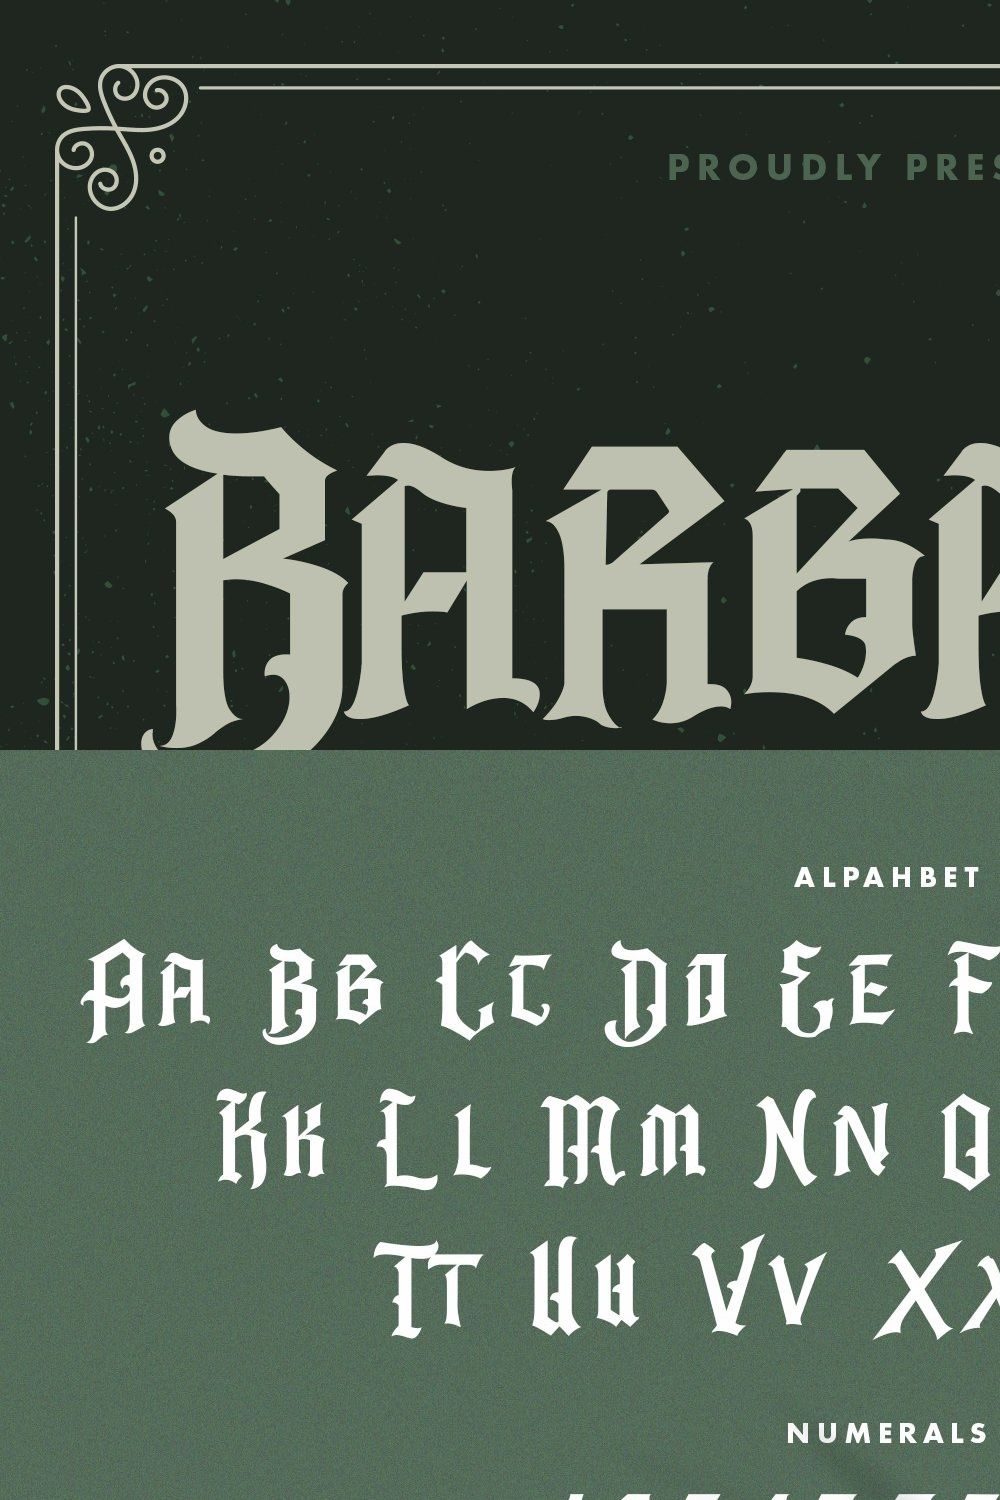 Barbatos Modern Blackletter Font pinterest preview image.